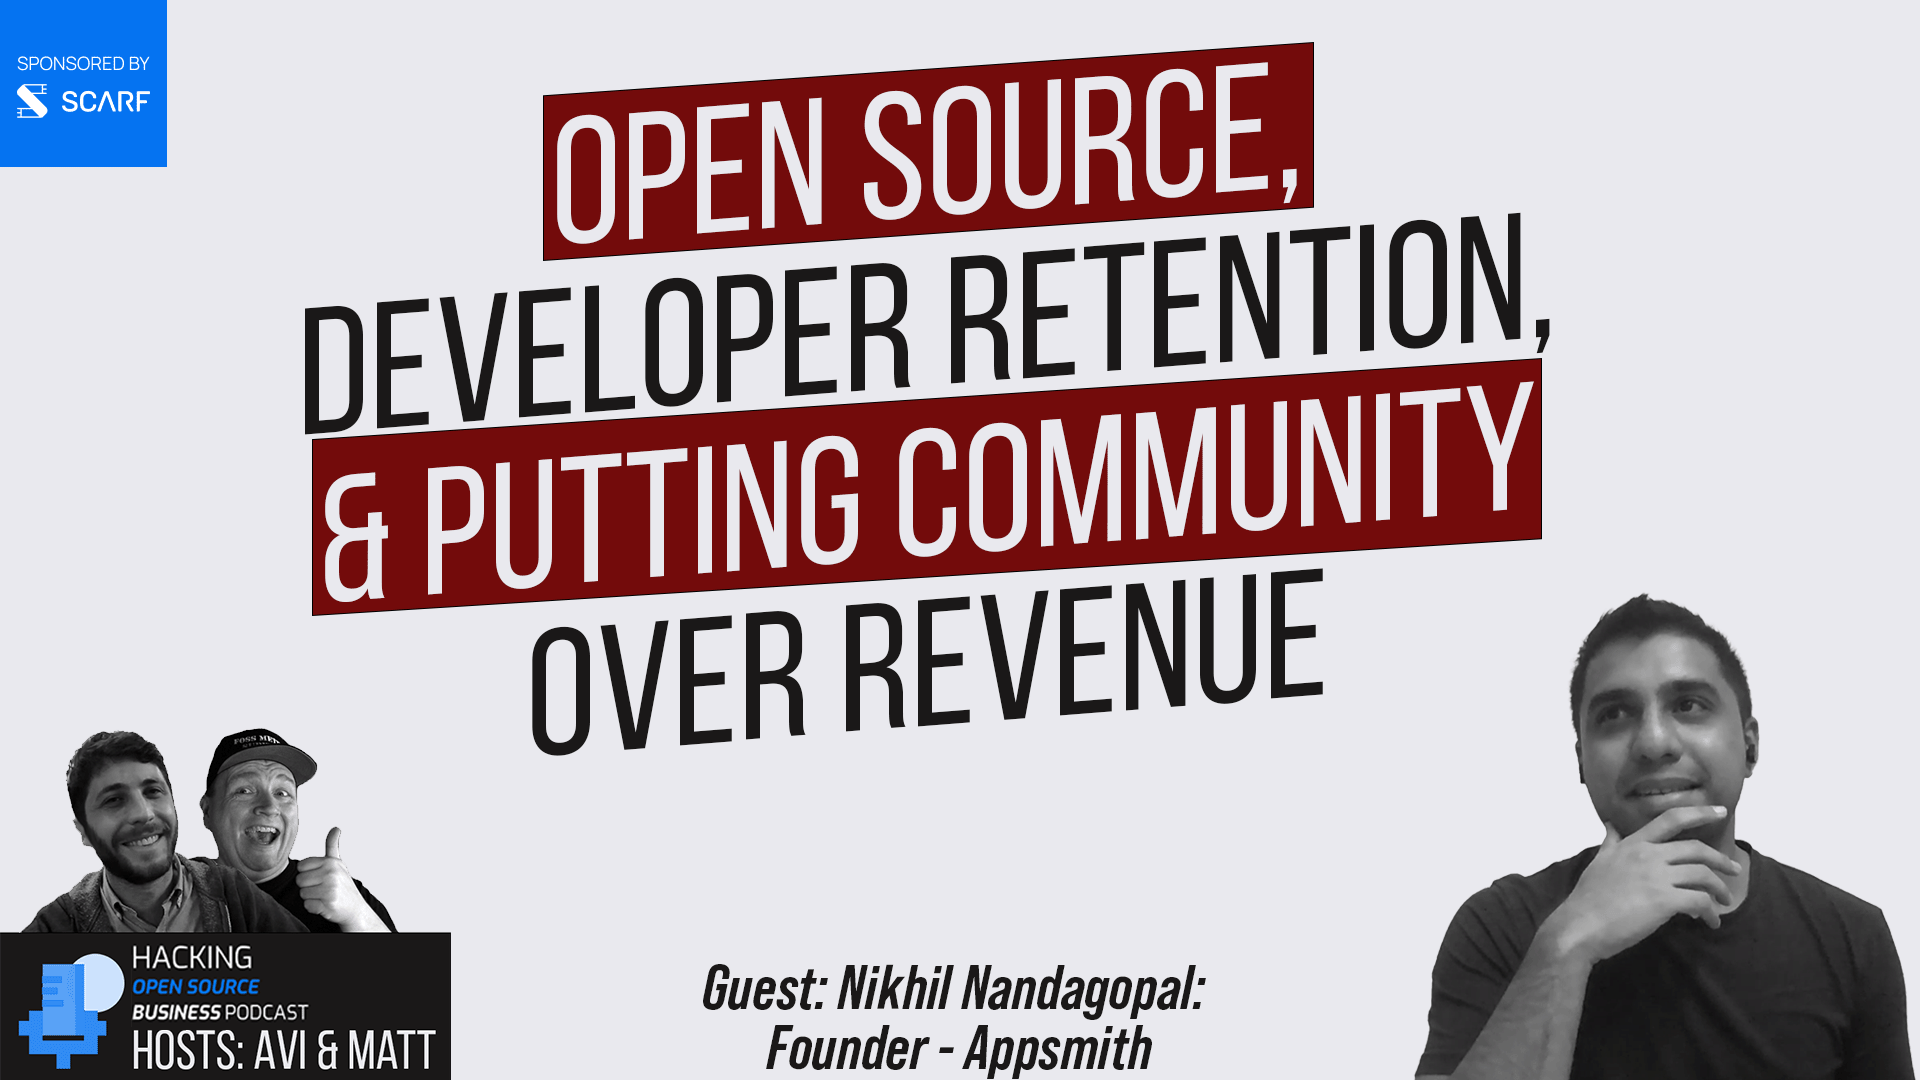 Open Source, Developer Retention, Community Over Revenue: w/ Appsmith Founder Nikhil Nandagopal